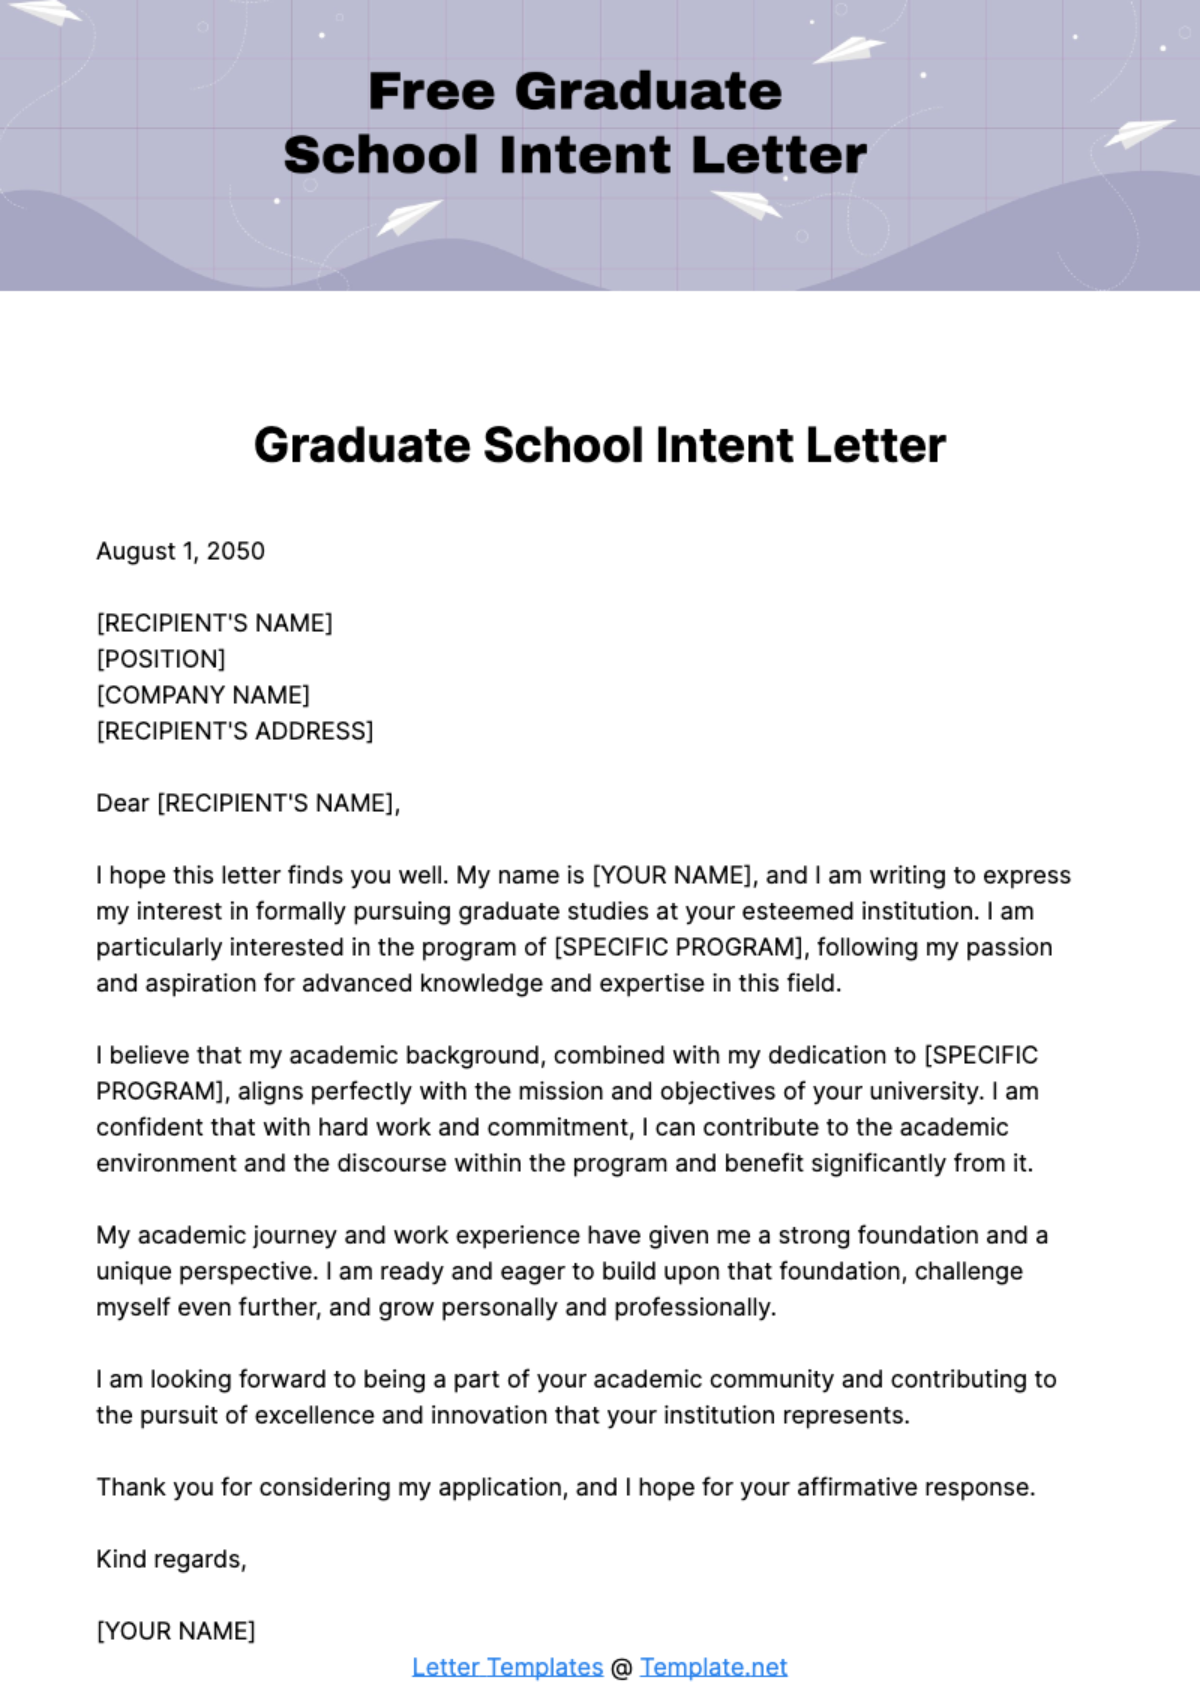 Free Graduate School Intent Letter Template